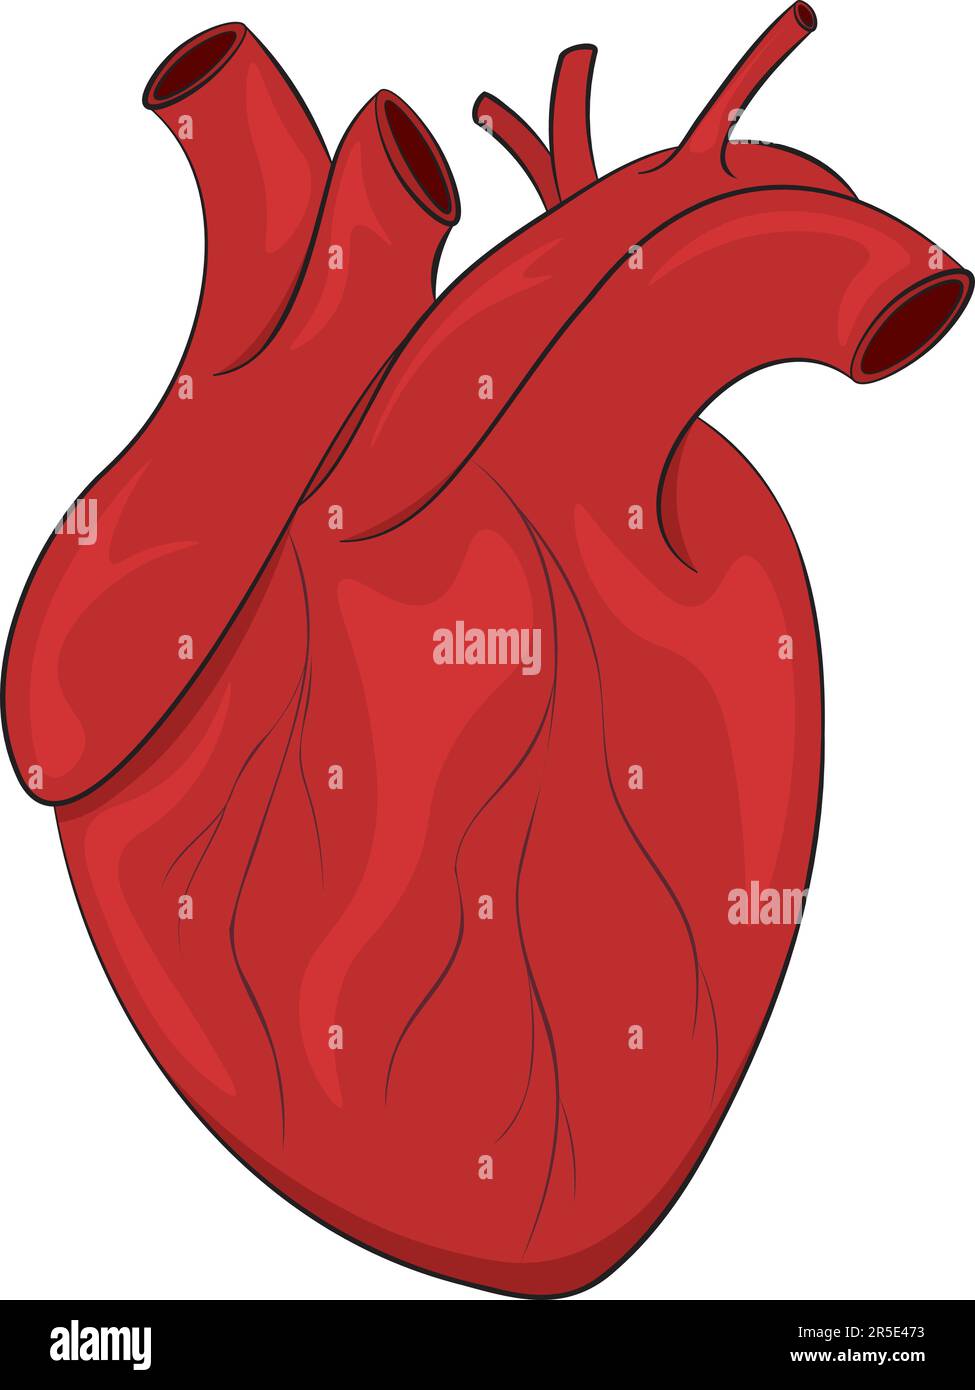 Realistic anatomical human heart vector illustration Stock Vector